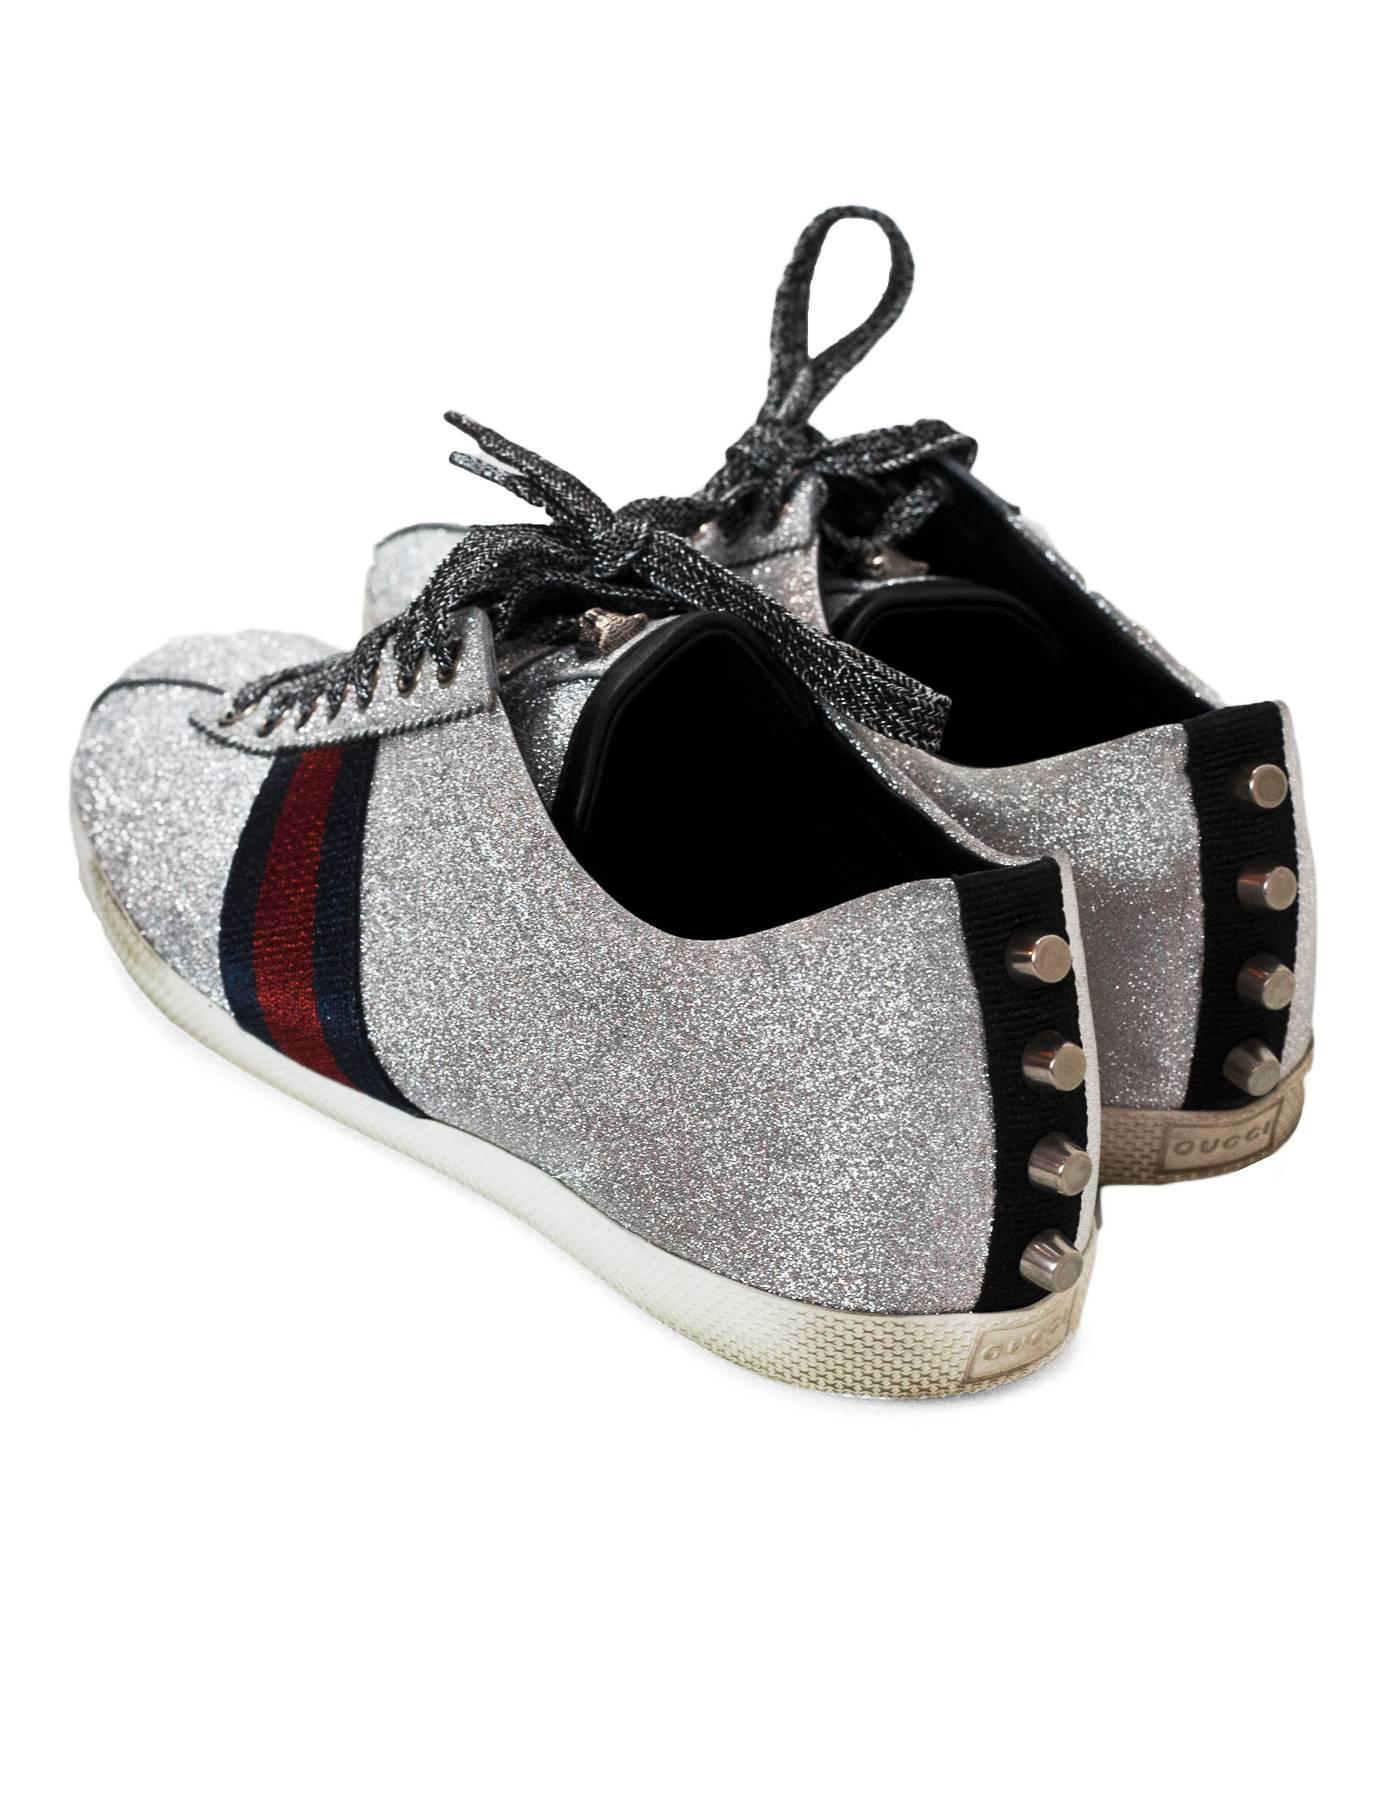 Gucci Men's Silver Glitter & Web Sneakers Sz 9 with Box, DB 1